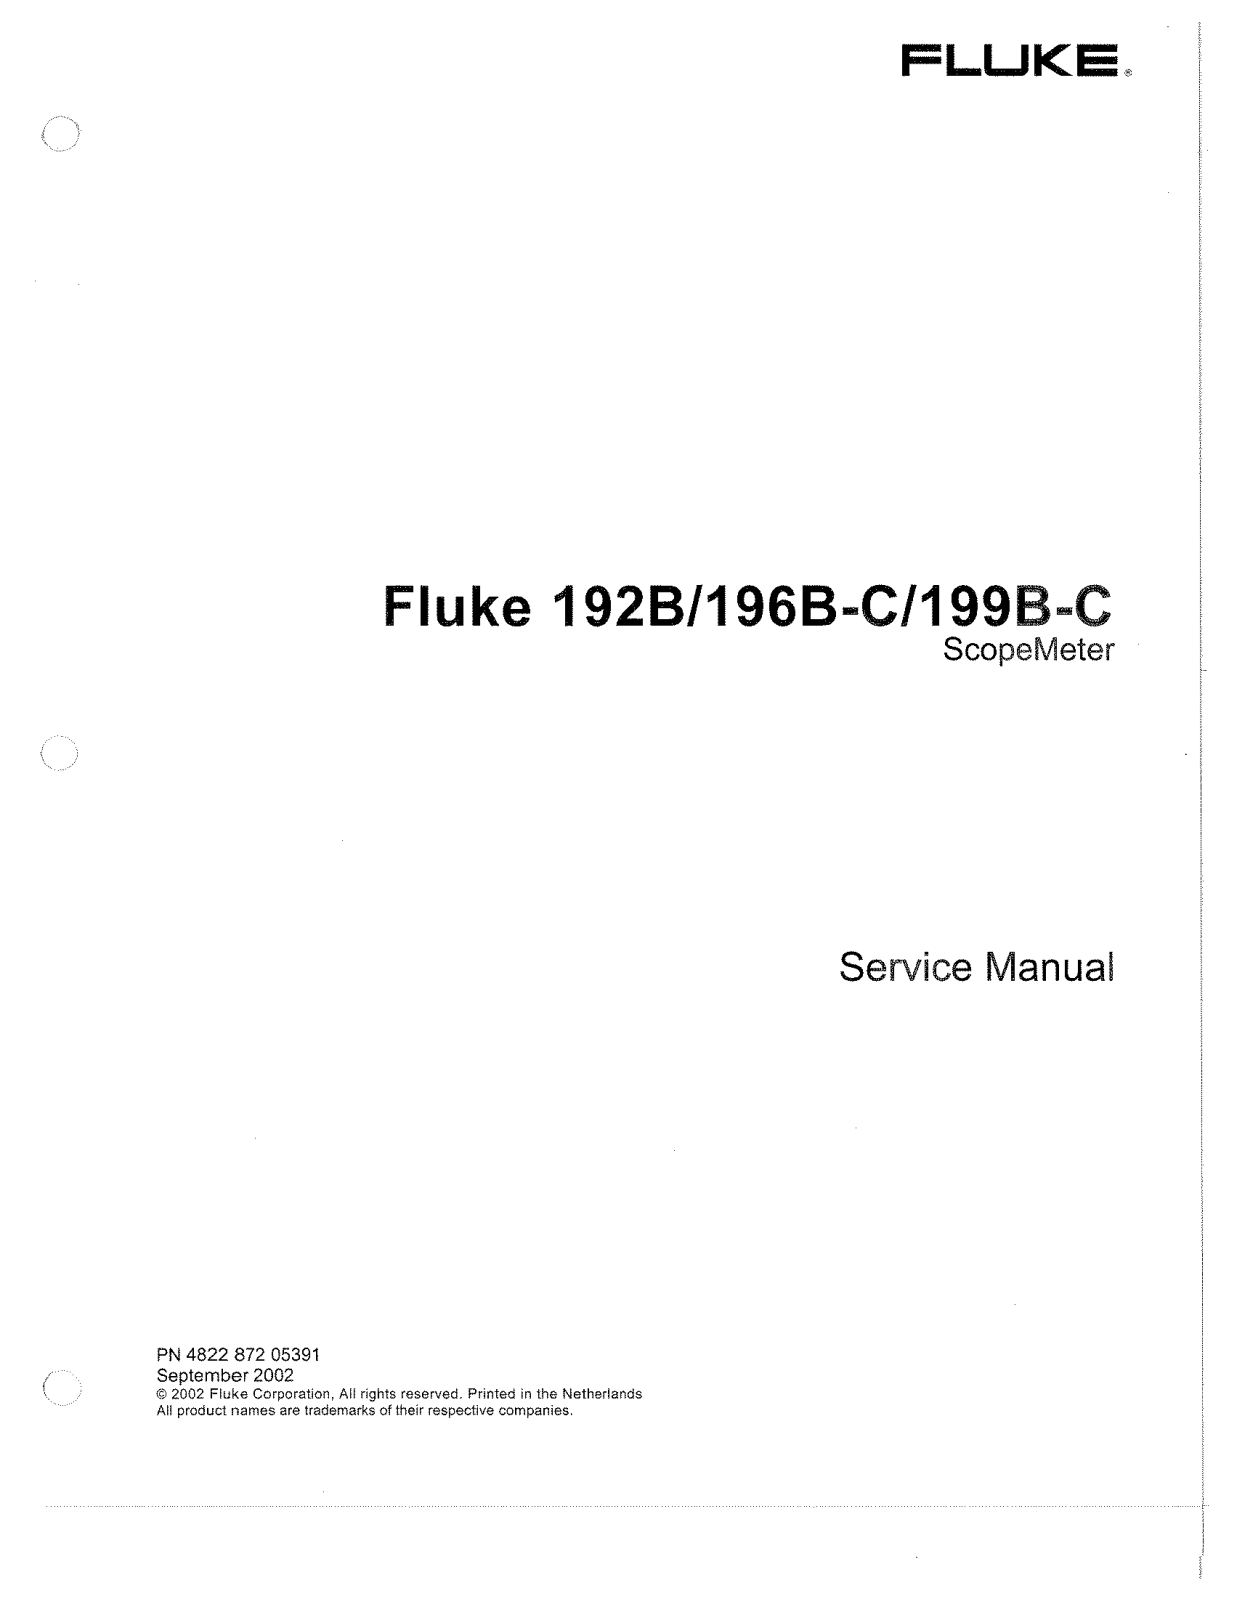 Fluke 199C, 199B, 196C, 196B, 192B Service manual